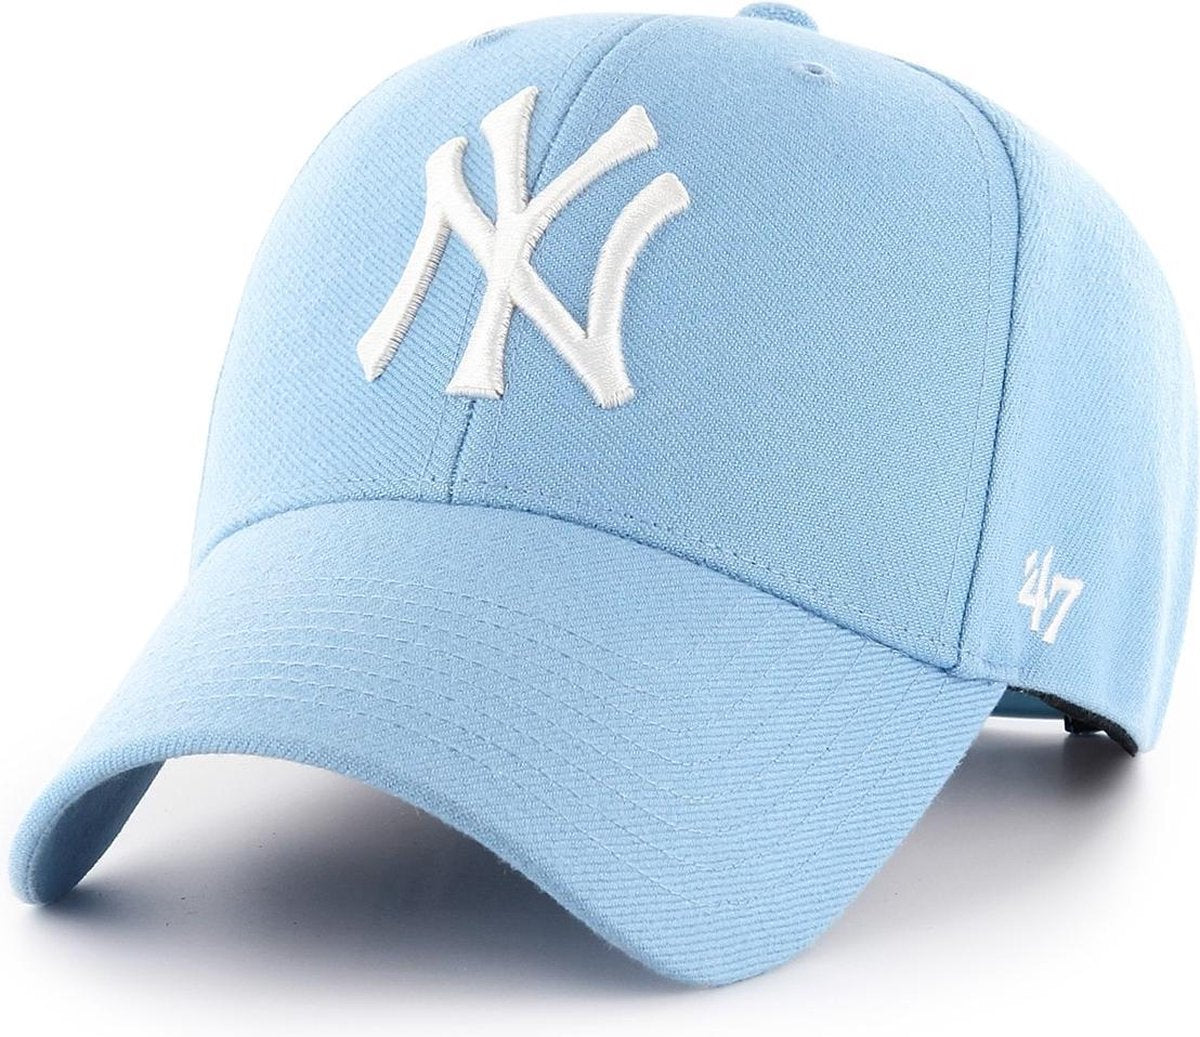 Baseball Cap - New York Yankees Cap Adjustable